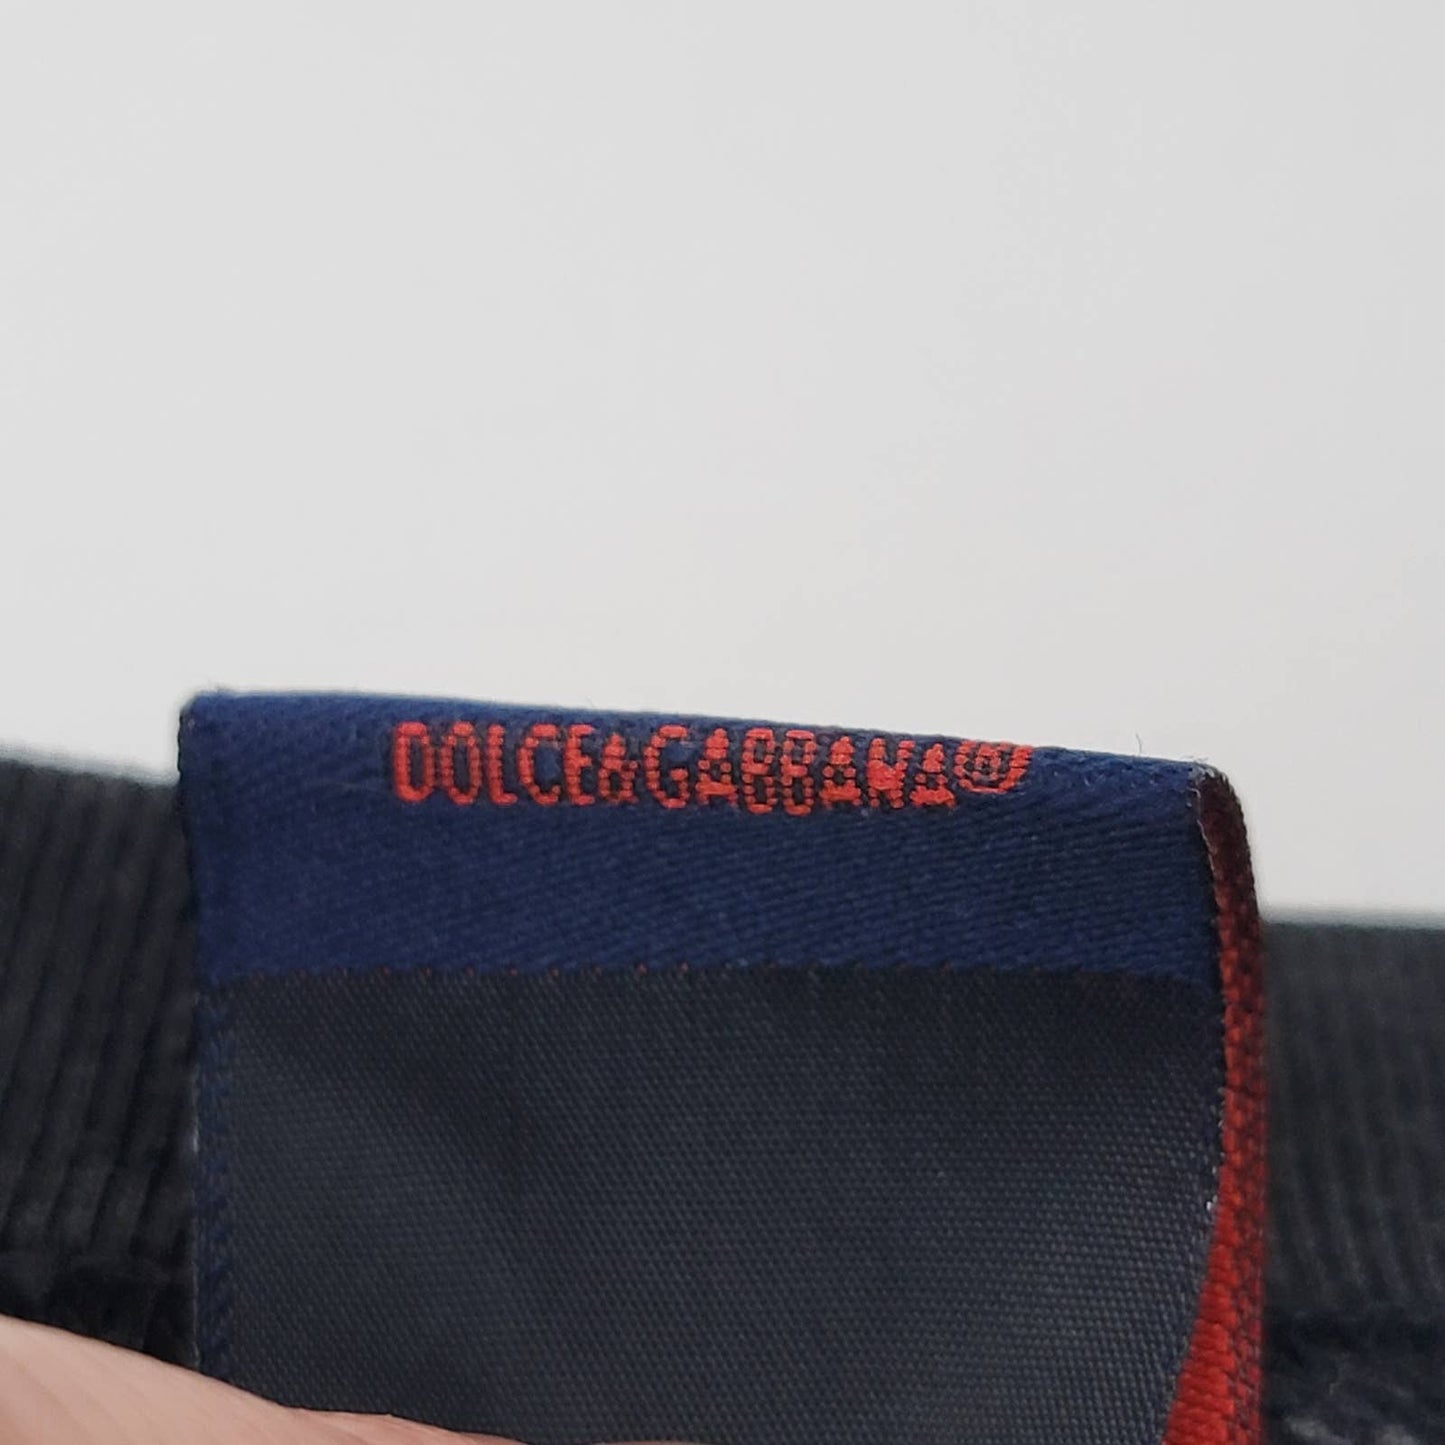 Vintage Y2k DG Dolce Gabbana Long Sleeve Logo Shirt